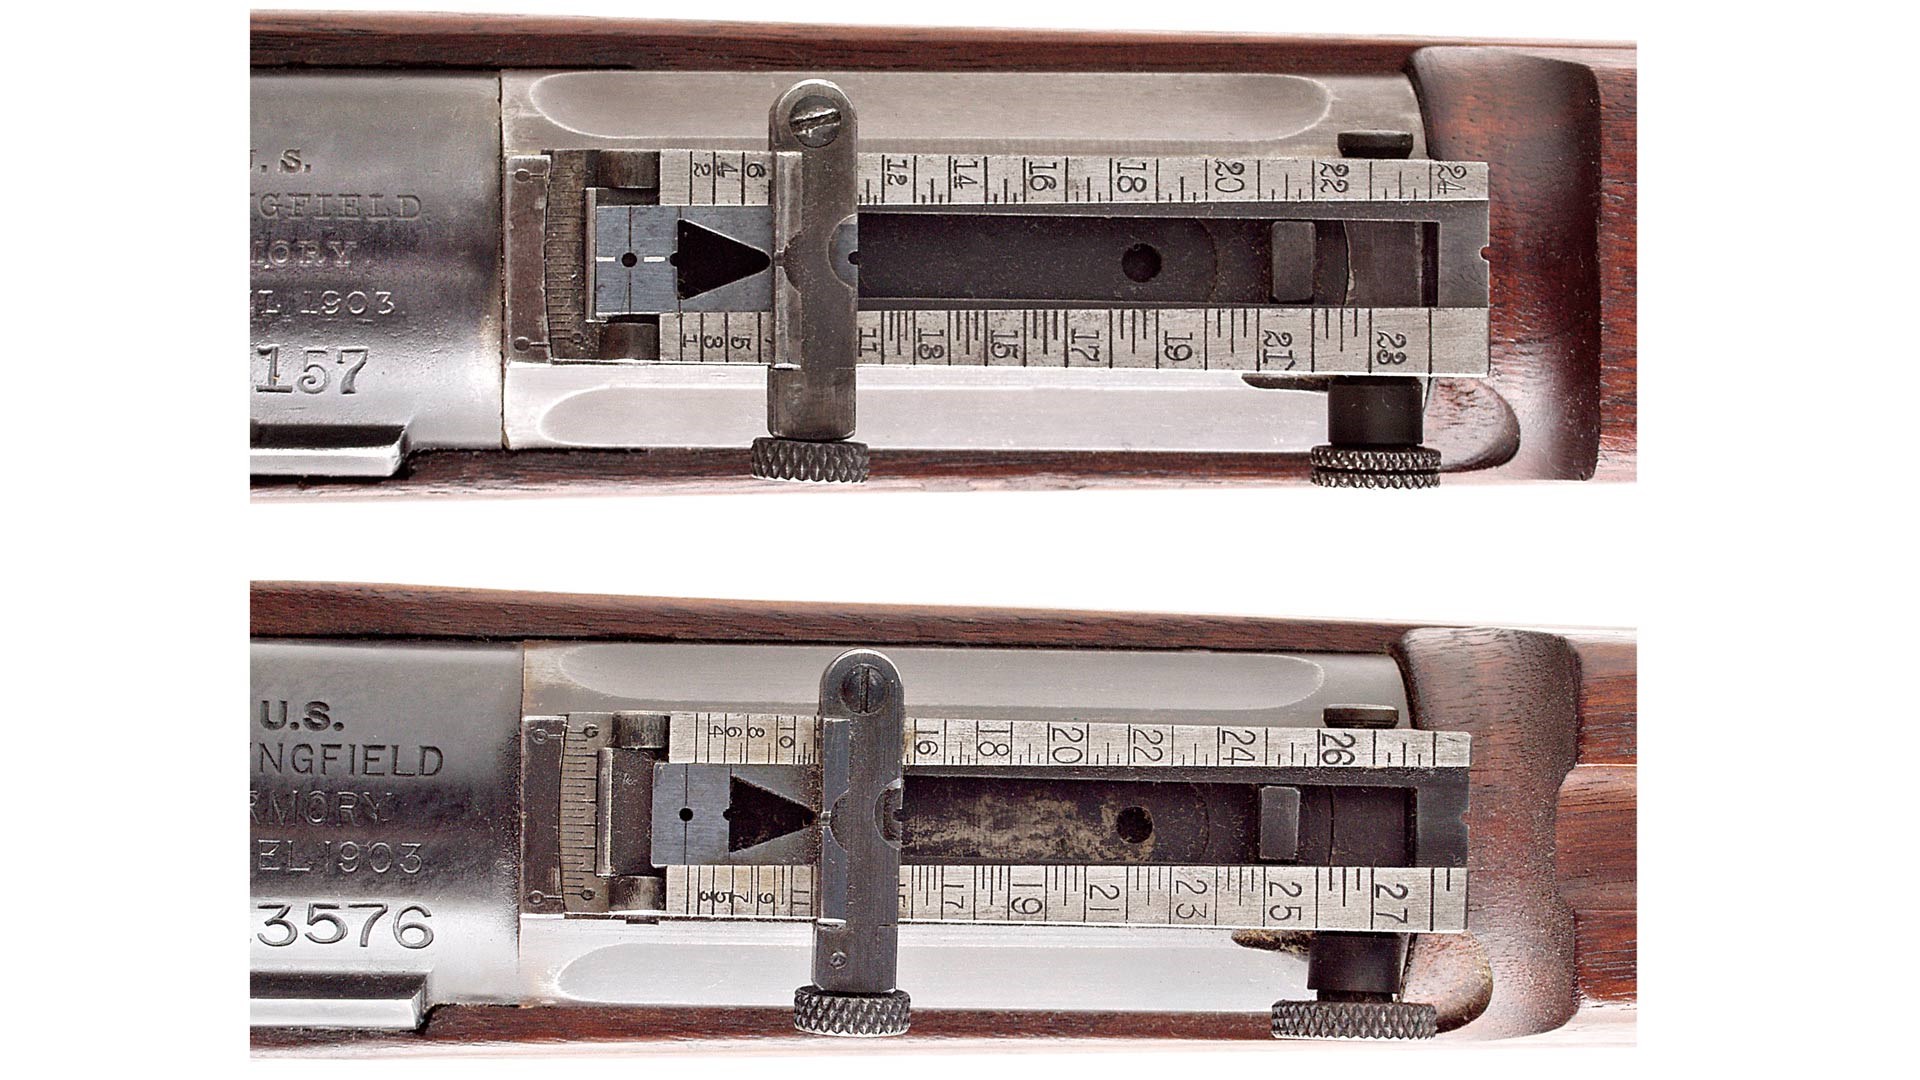 Comparison of u.S. Springfield Model of 1903 rifles sights ladder